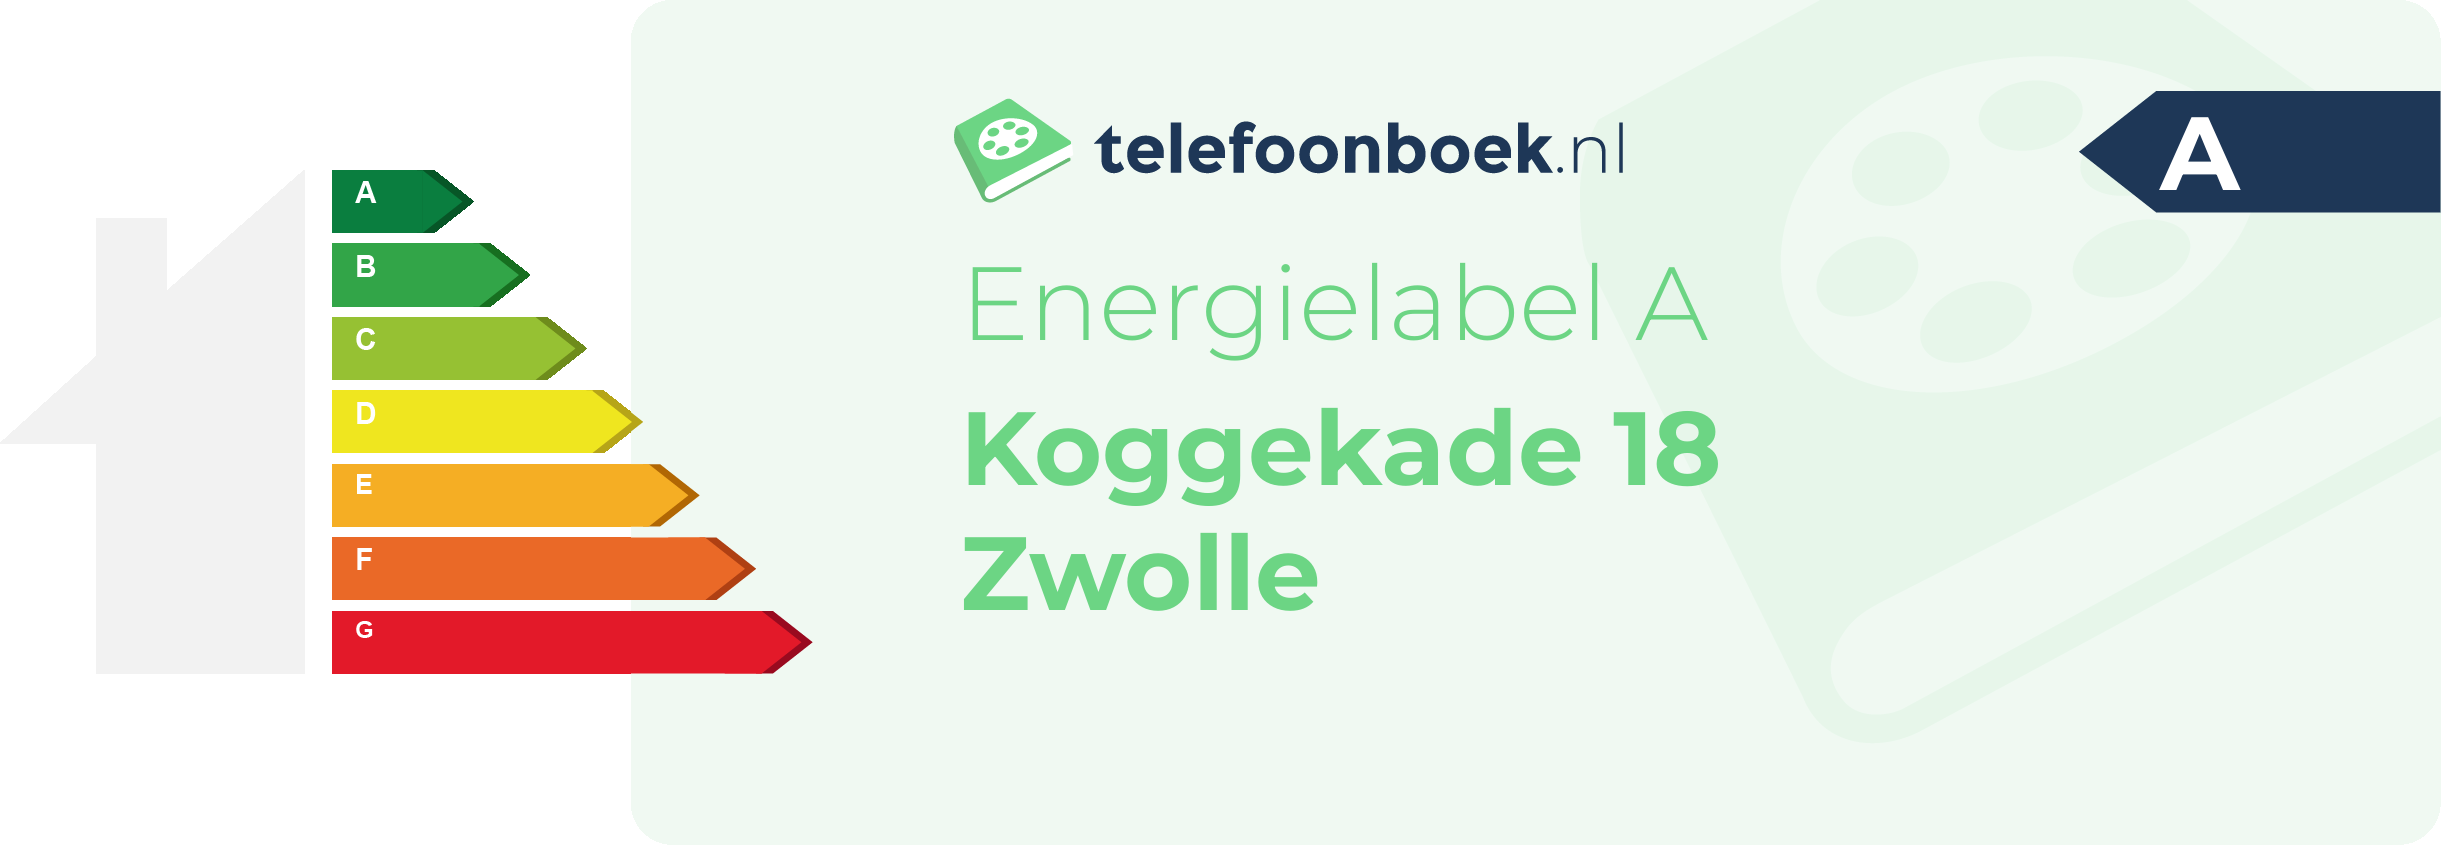 Energielabel Koggekade 18 Zwolle